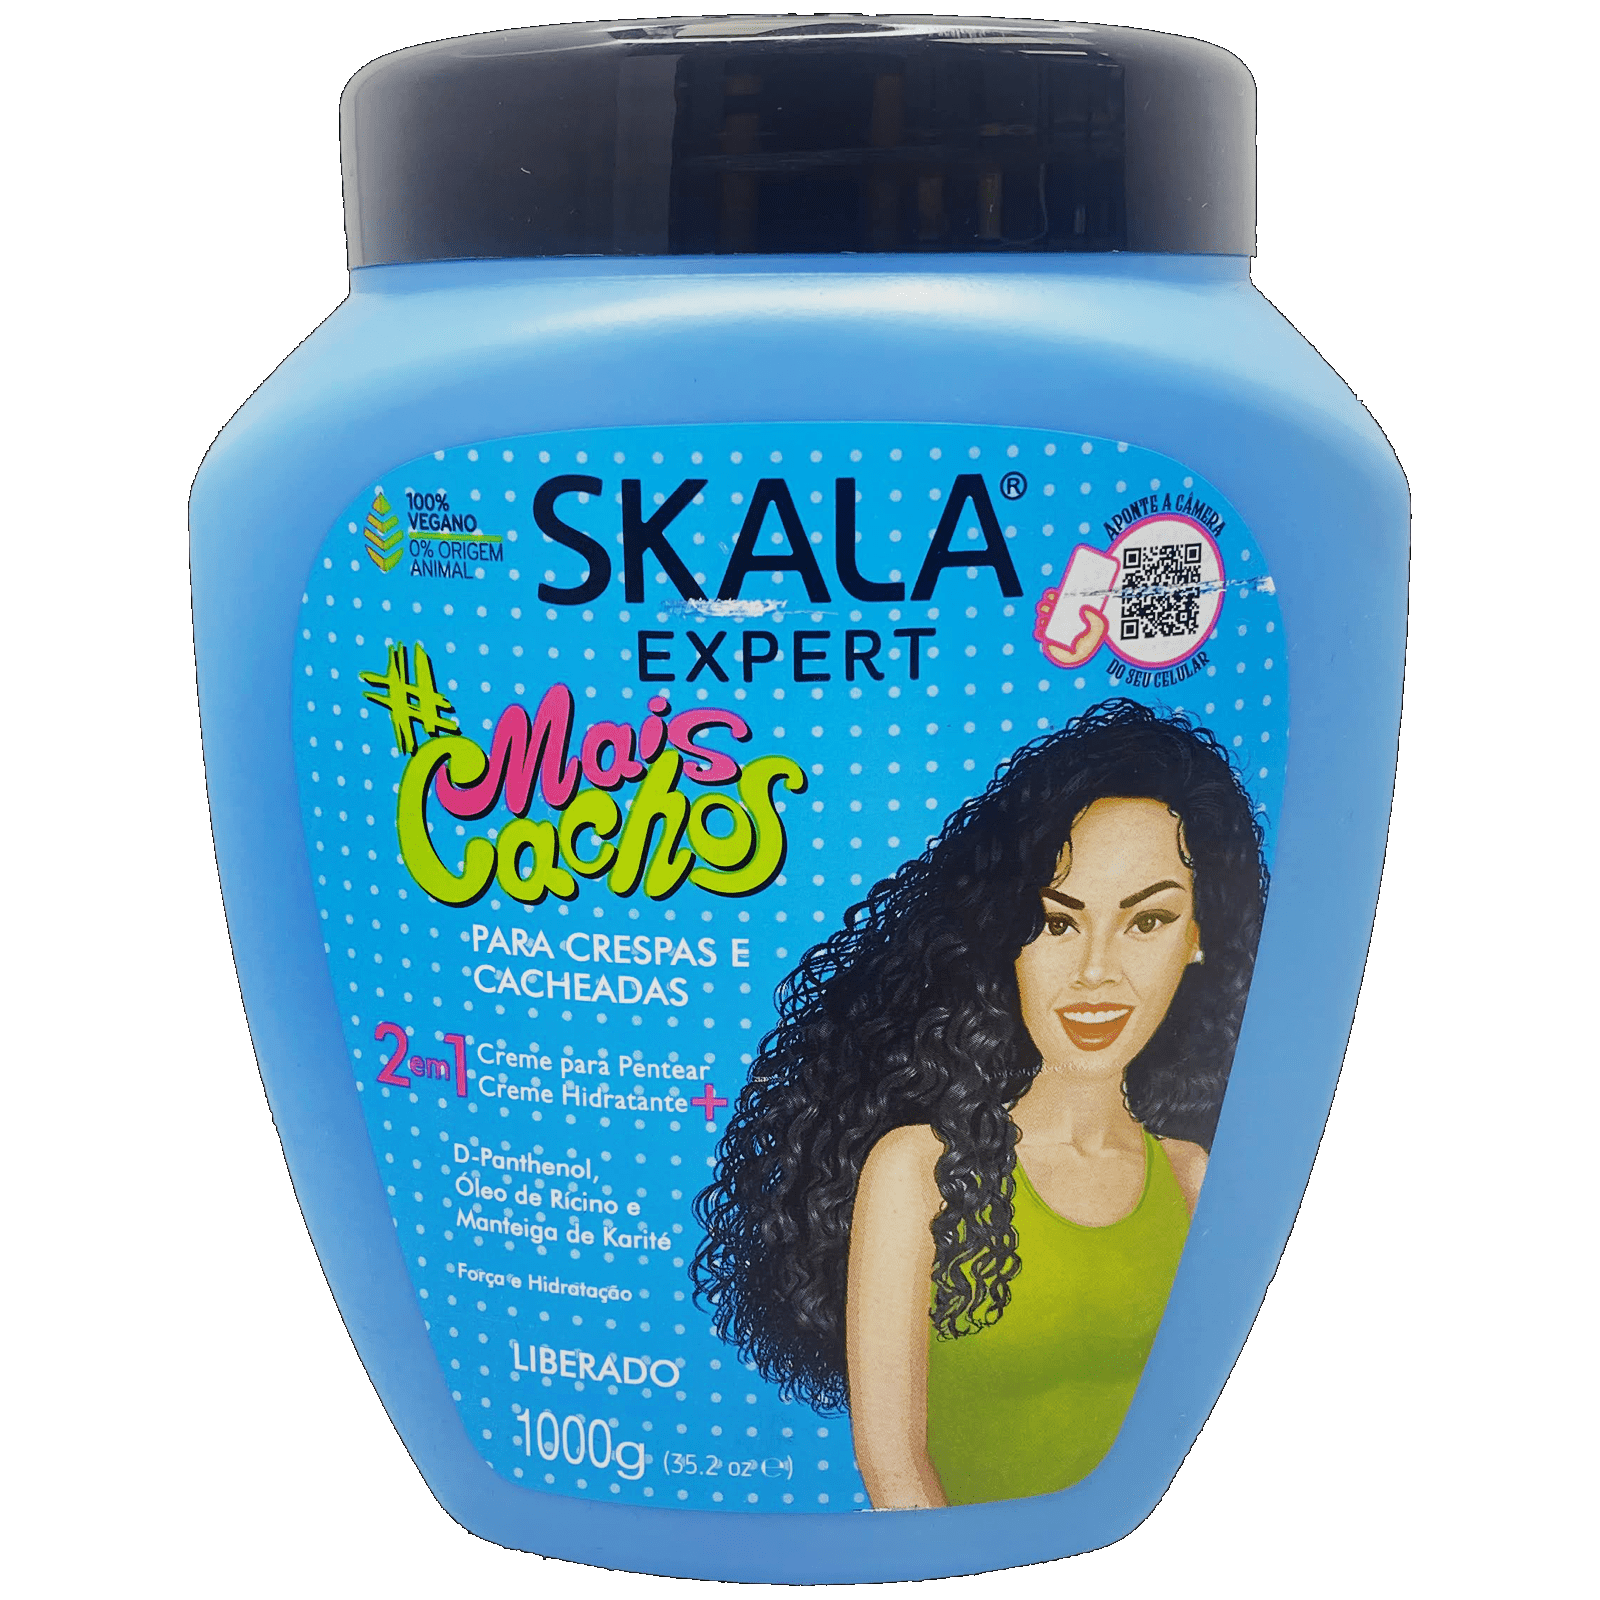 Skala 2 in 1 Hair Treatment Conditioner Curly Hair / Mais Cachos